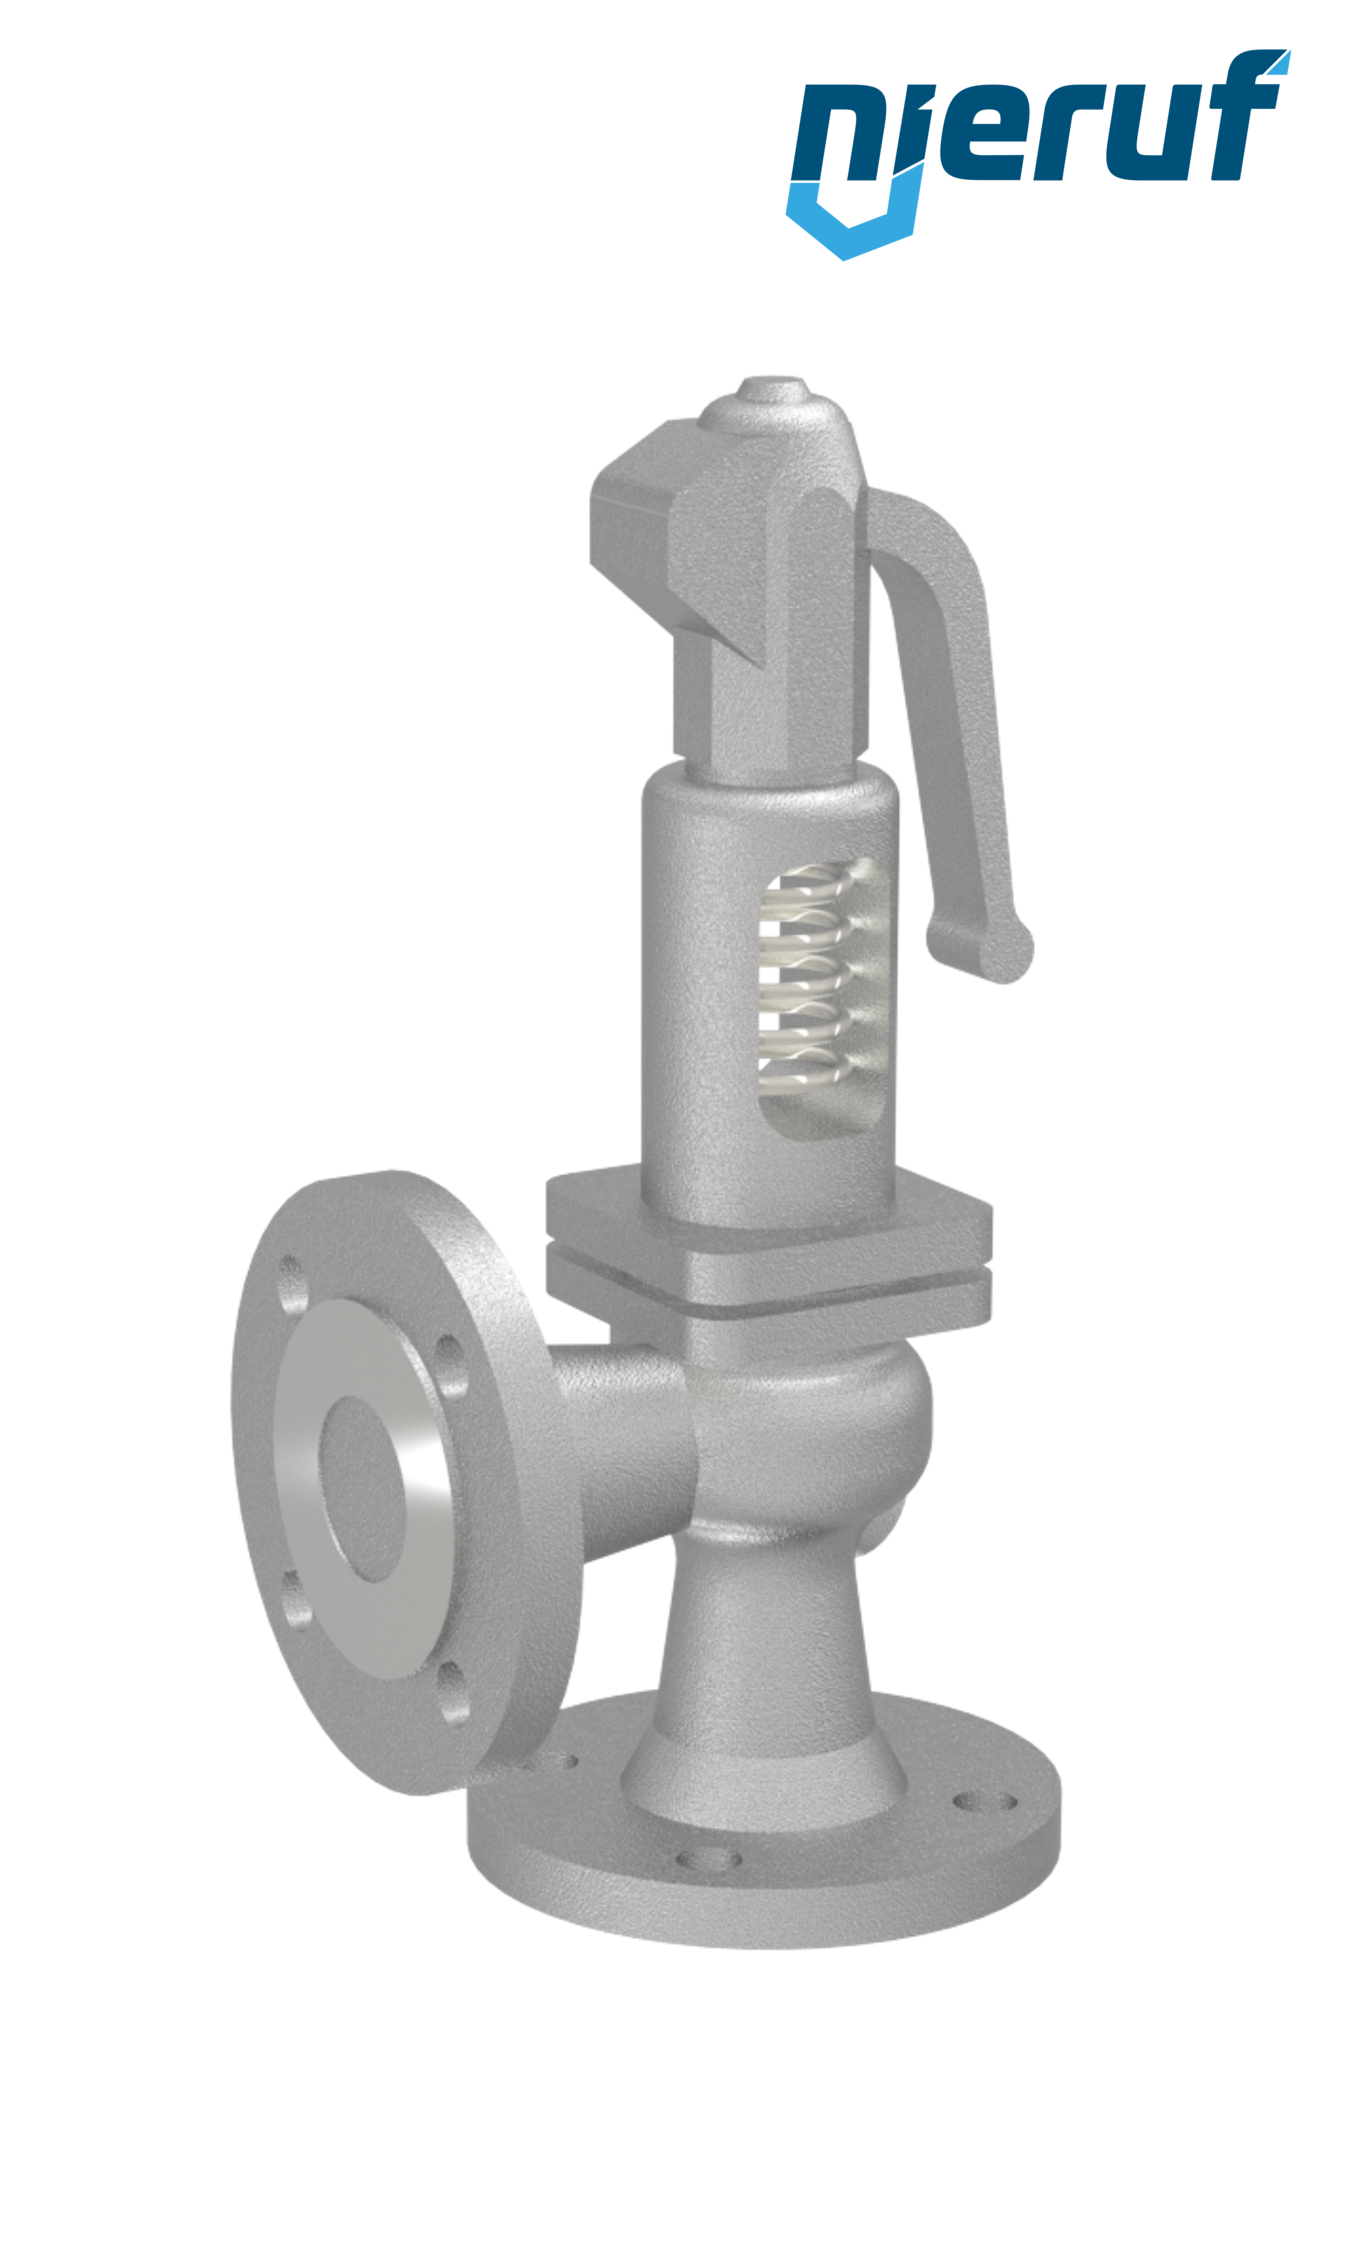 flange-safety valve DN25/DN25 SF0102, cast iron EN-JL1040 EPDM, with lever